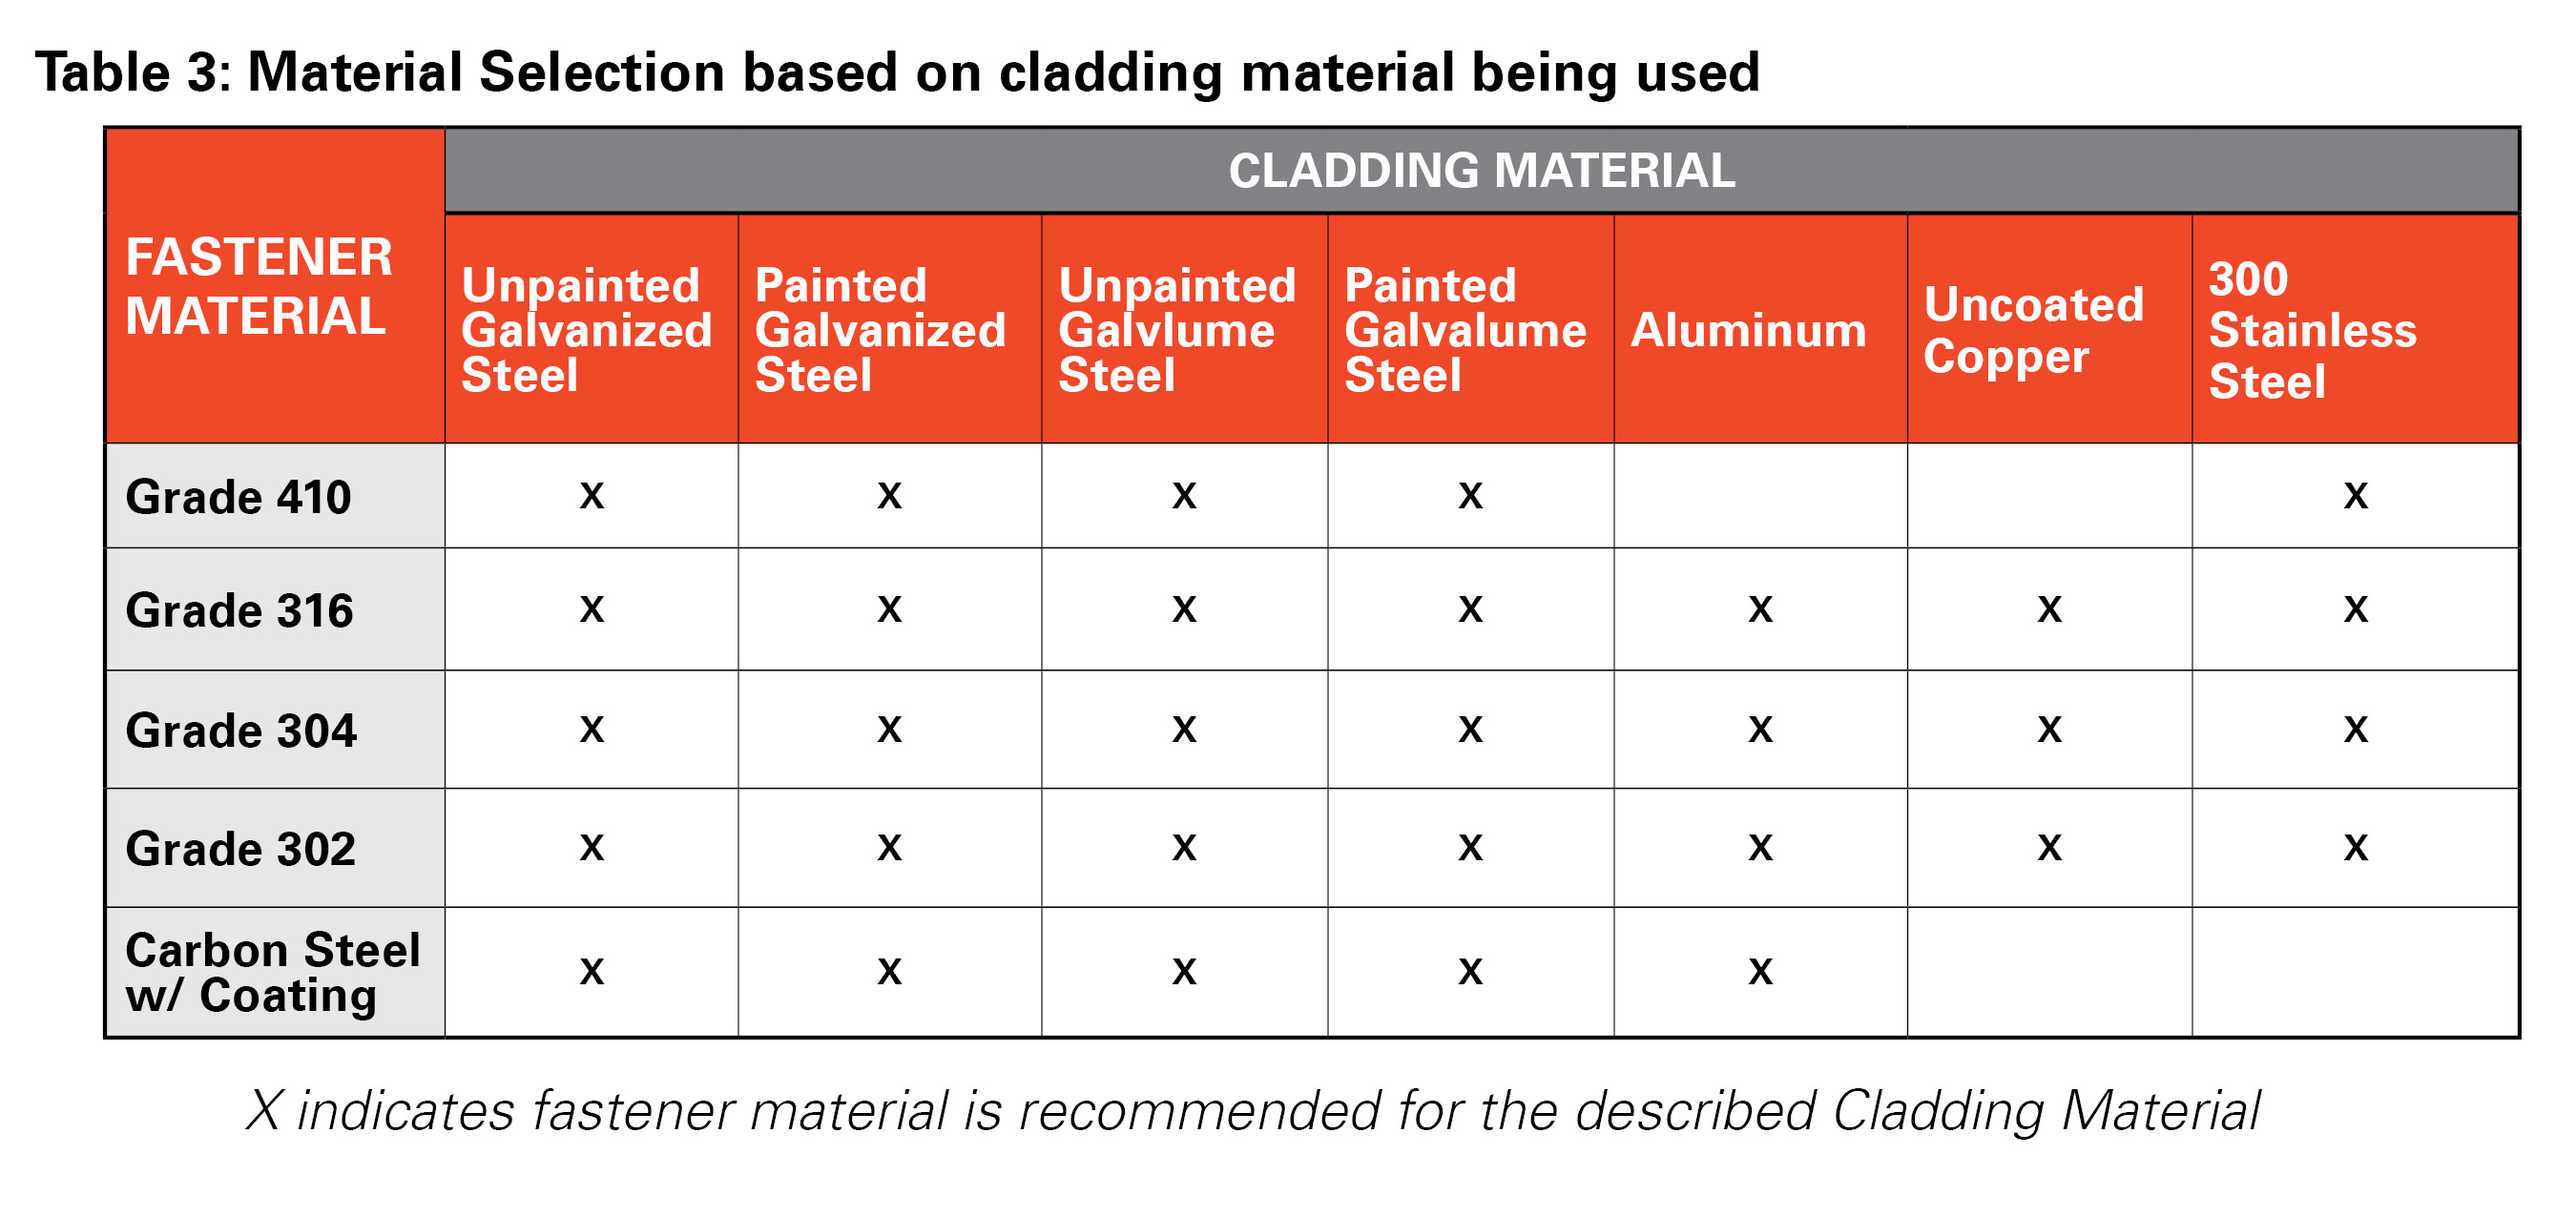 Benefits of 316 vs. 304 Stainless Steel - Bergsen Metal